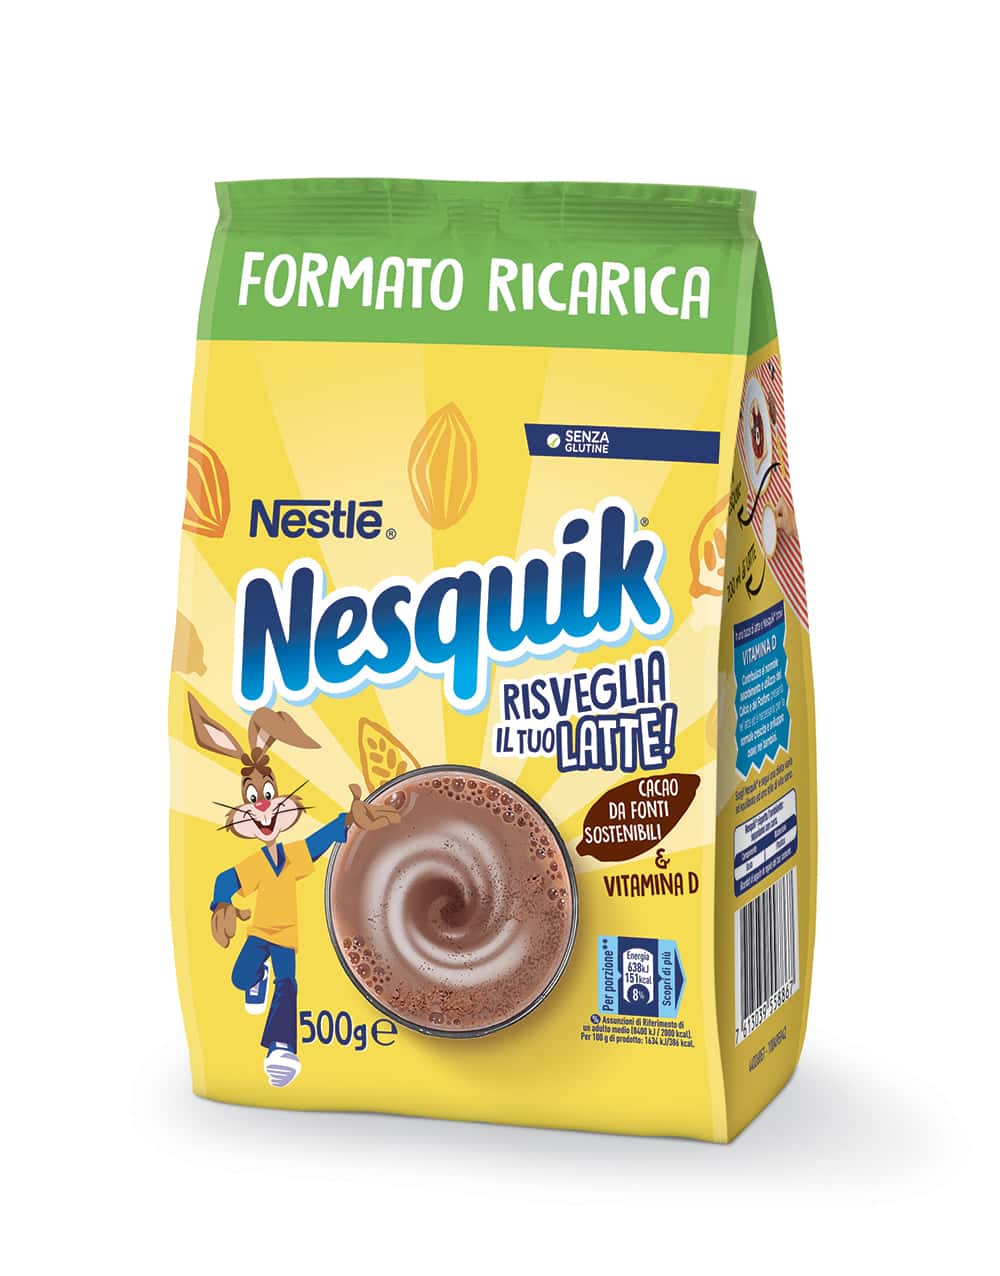 Nesquik Cacao Solubile per Latte - 500g busta